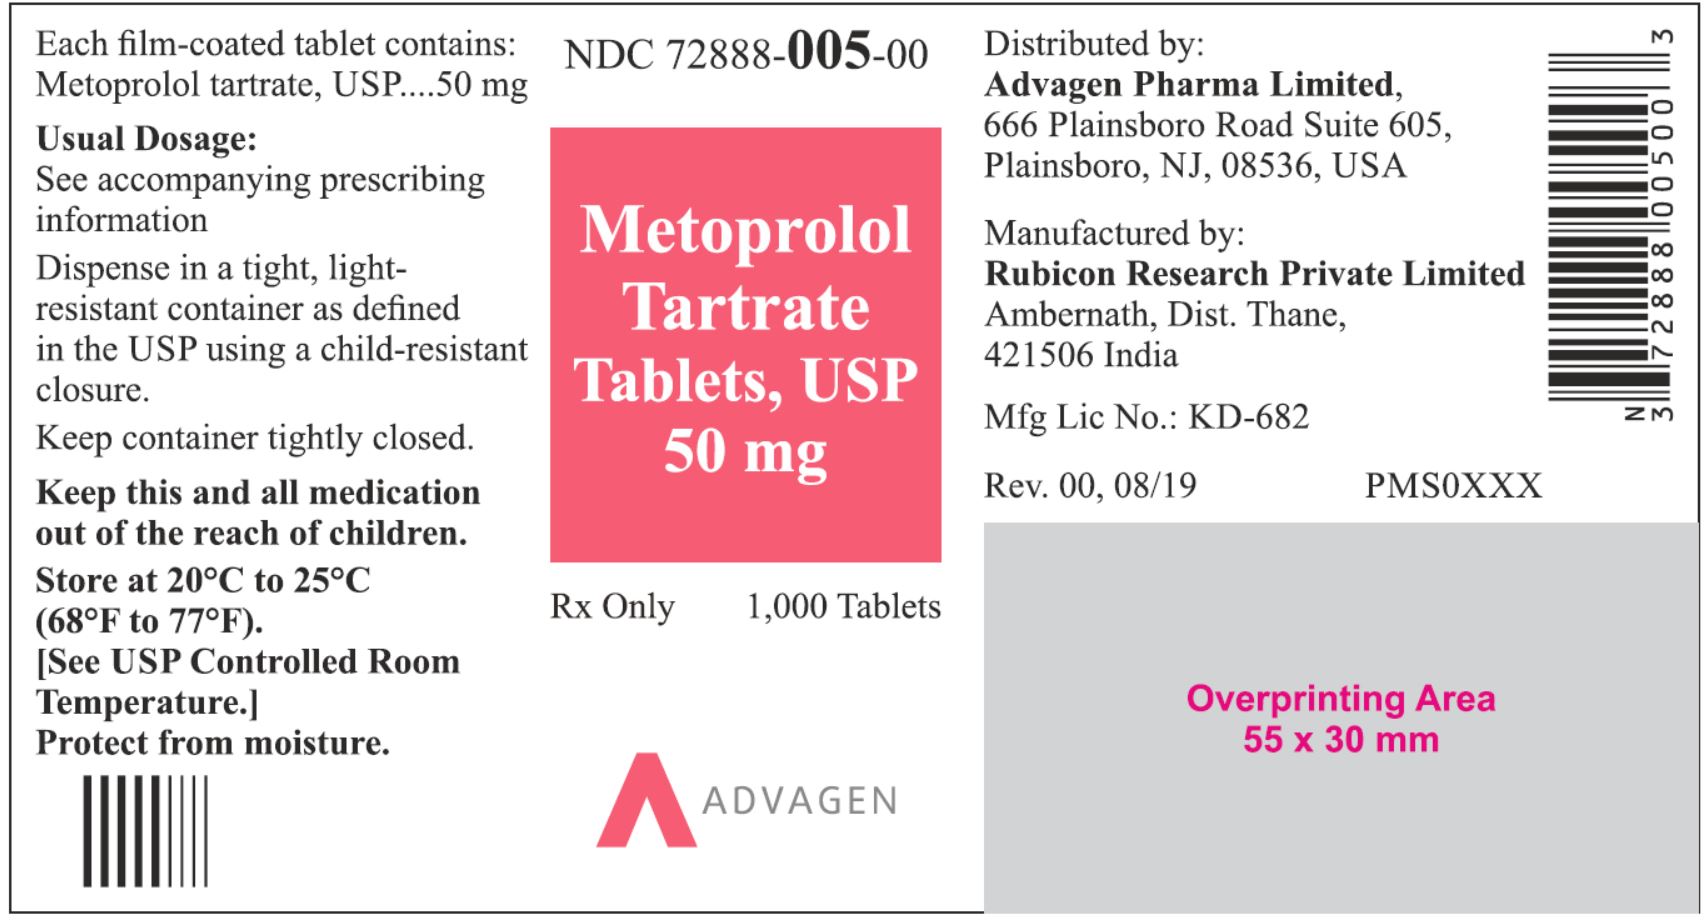 NDC: <a href=/NDC/72888-005-00>72888-005-00</a> - Metoprolol Tartrate Tablets, USP 50 mg - 1000 Tablets